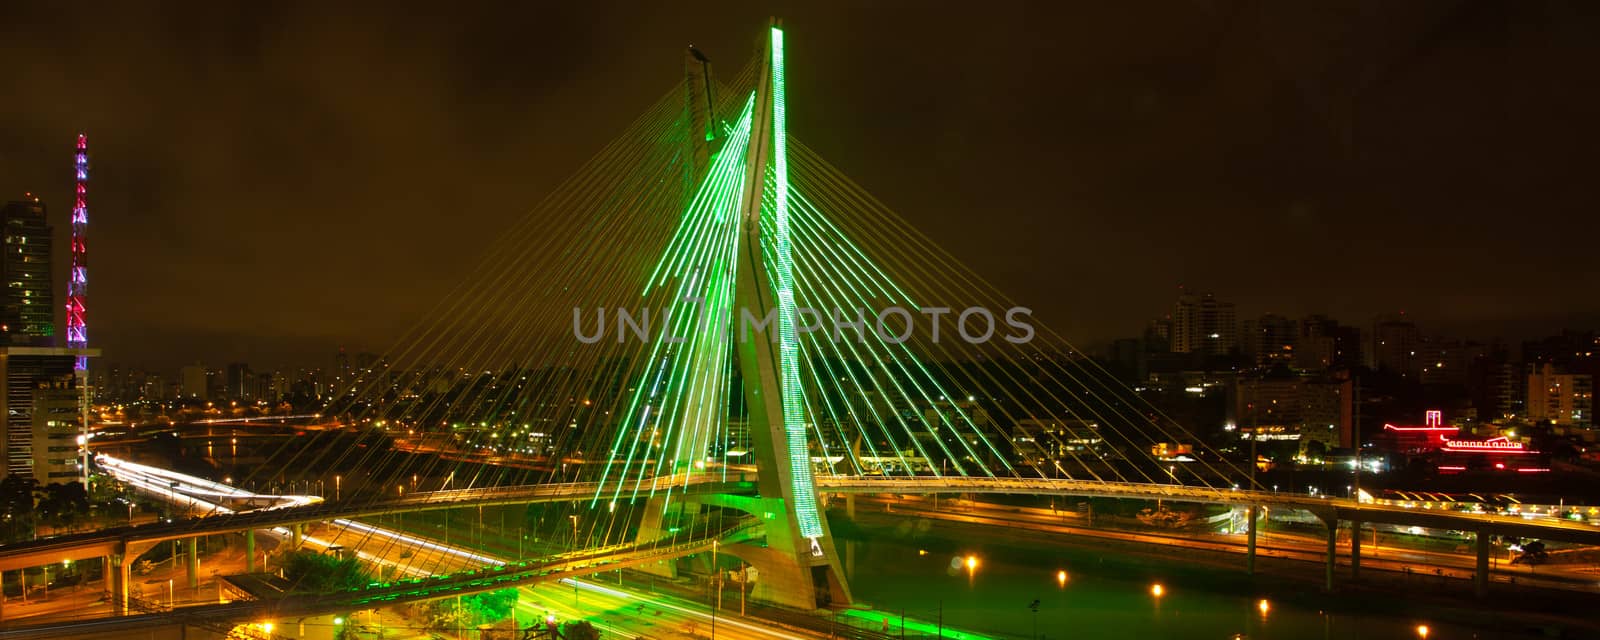 Sao Paulo bridge at night by CelsoDiniz